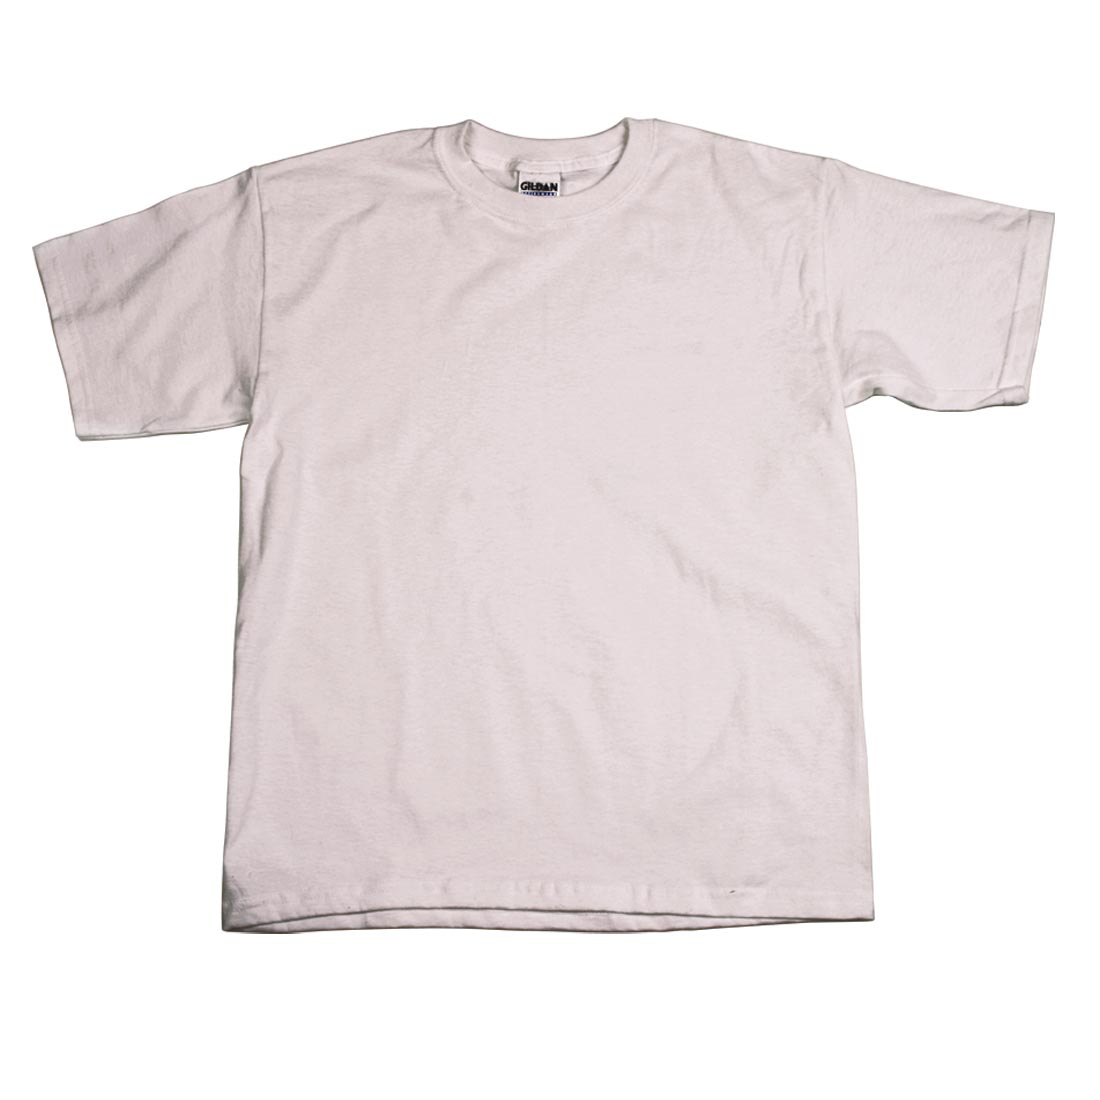 Youth Large Plain White T-Shirt